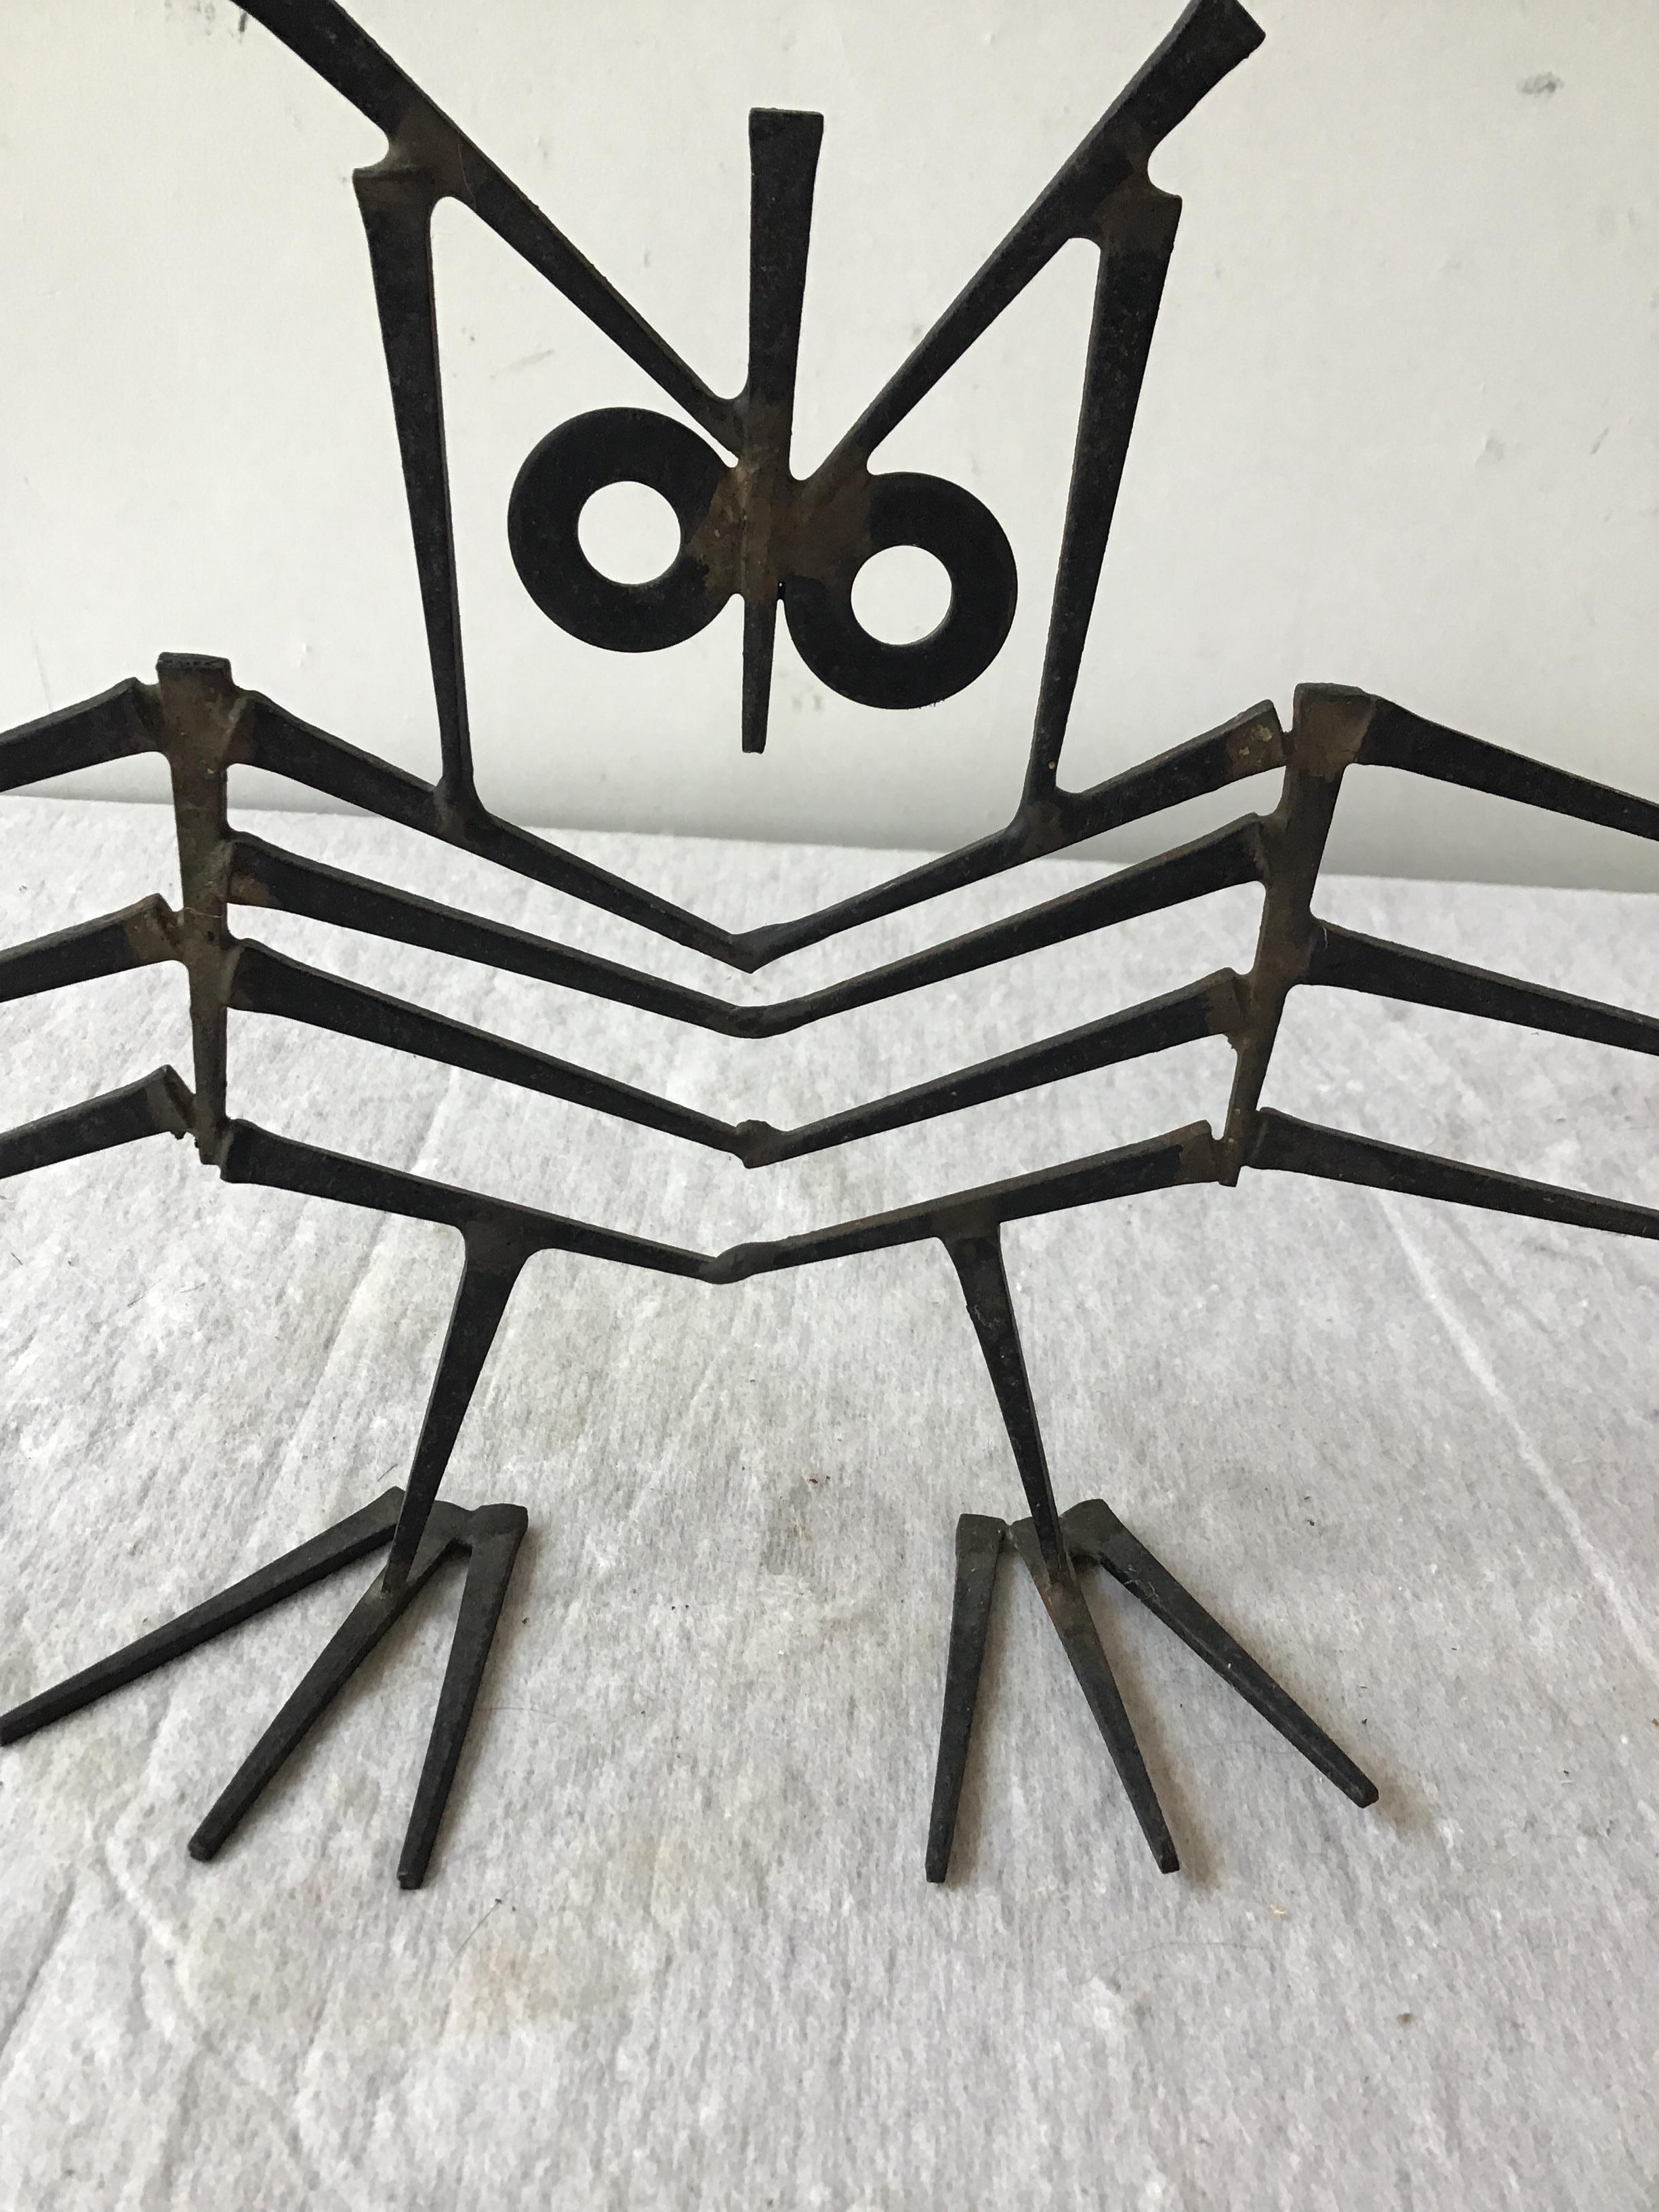 1960s Iron Abstract Owl Sculpture 3